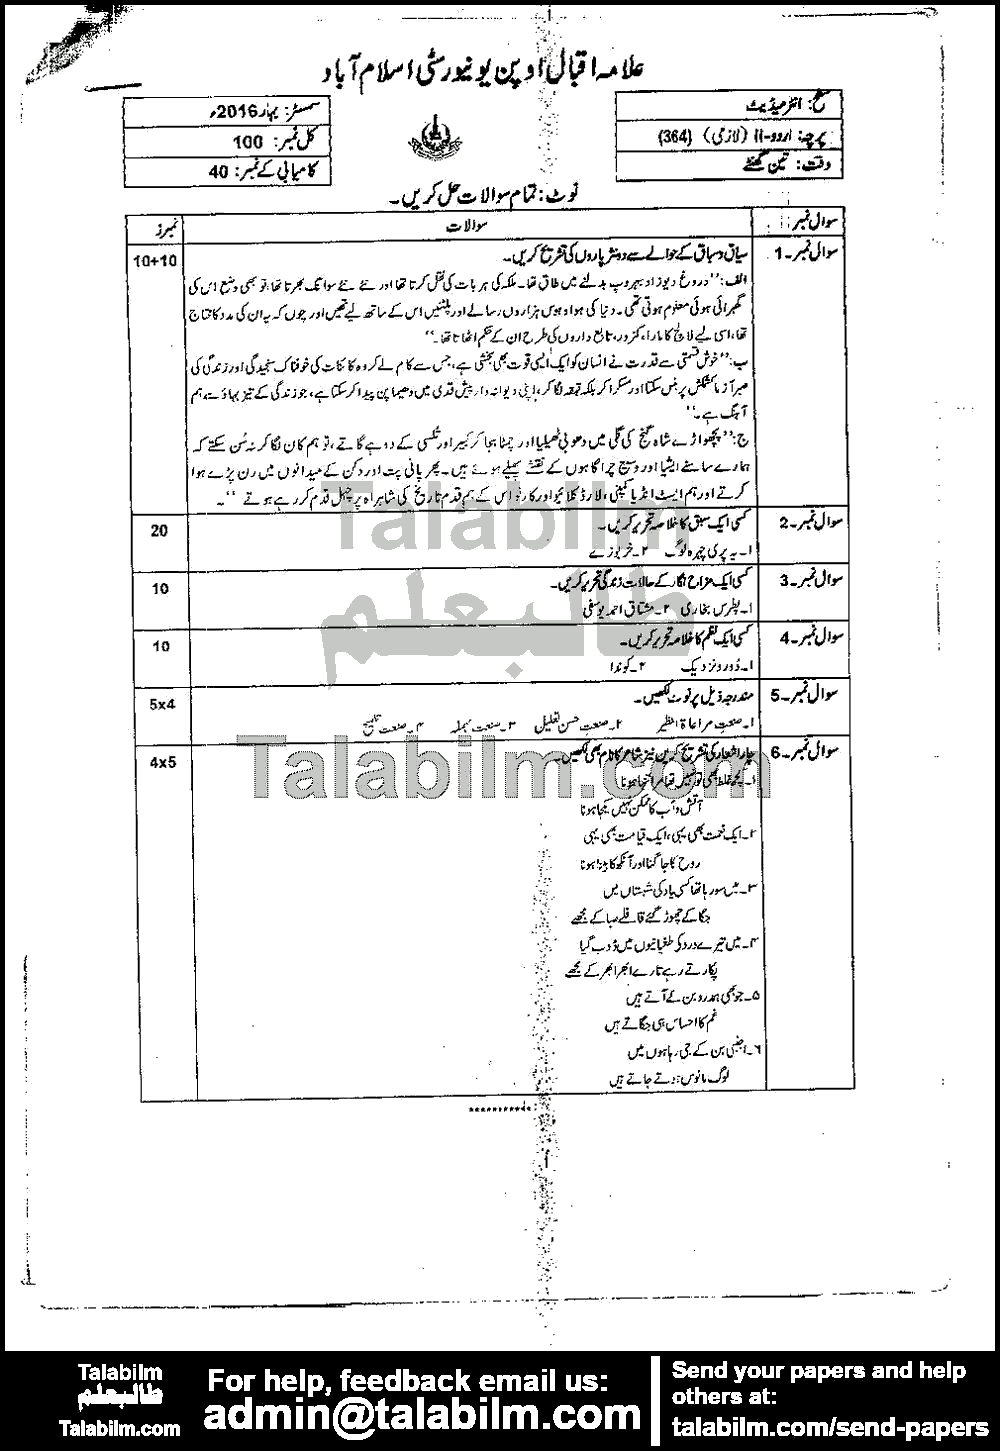 Urdu-II 364 past paper for Spring 2016